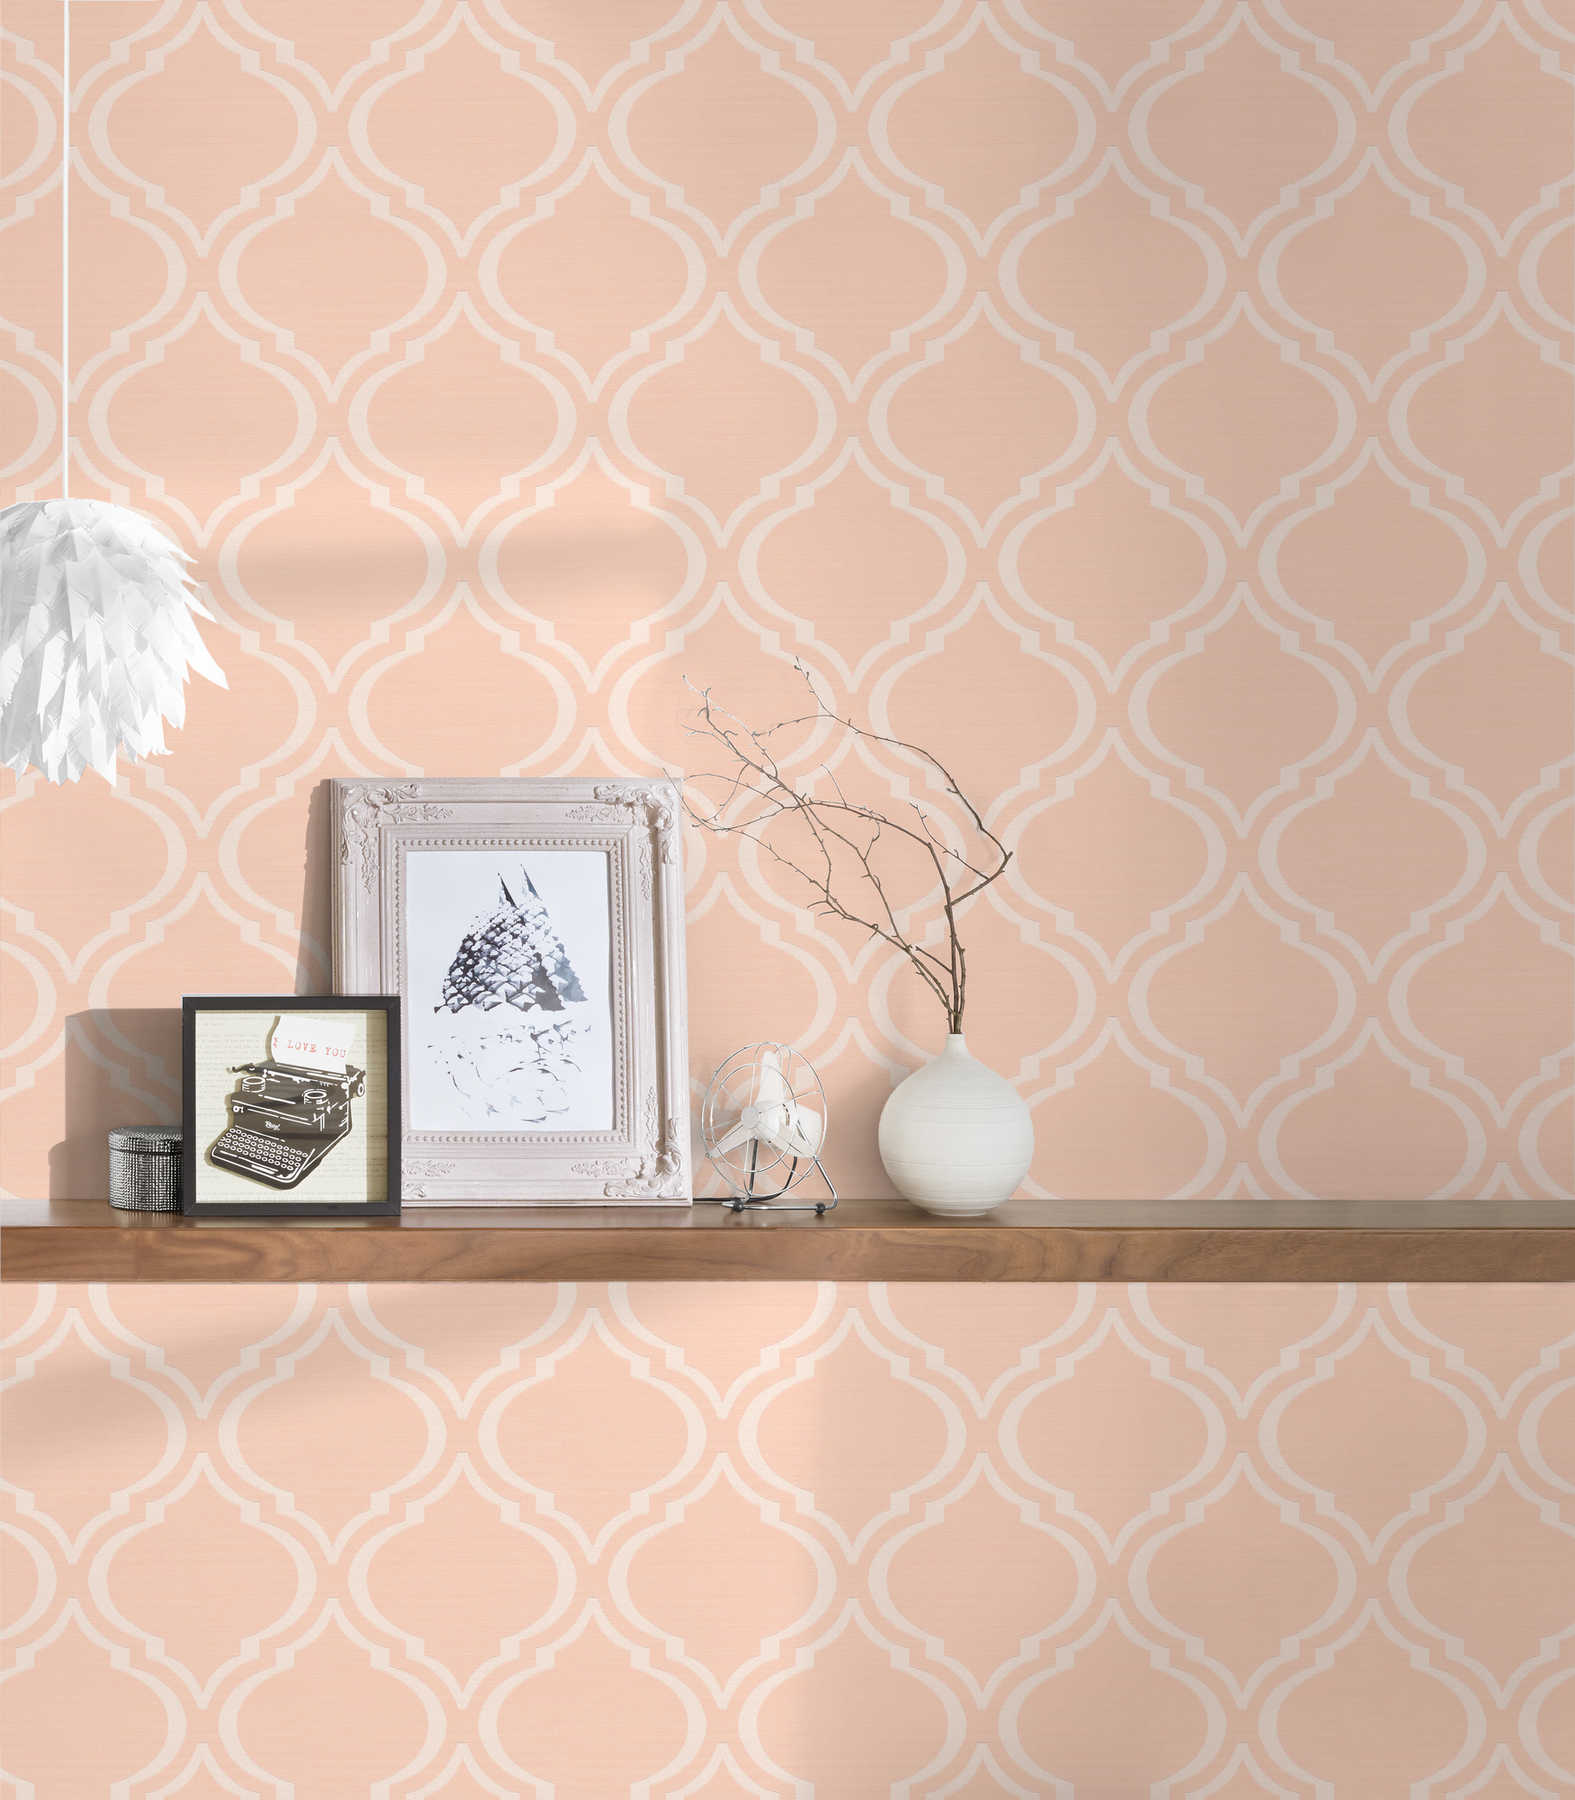             Wallpaper retro design with Art Deco pattern & glossy effect - pink, orange, white
        